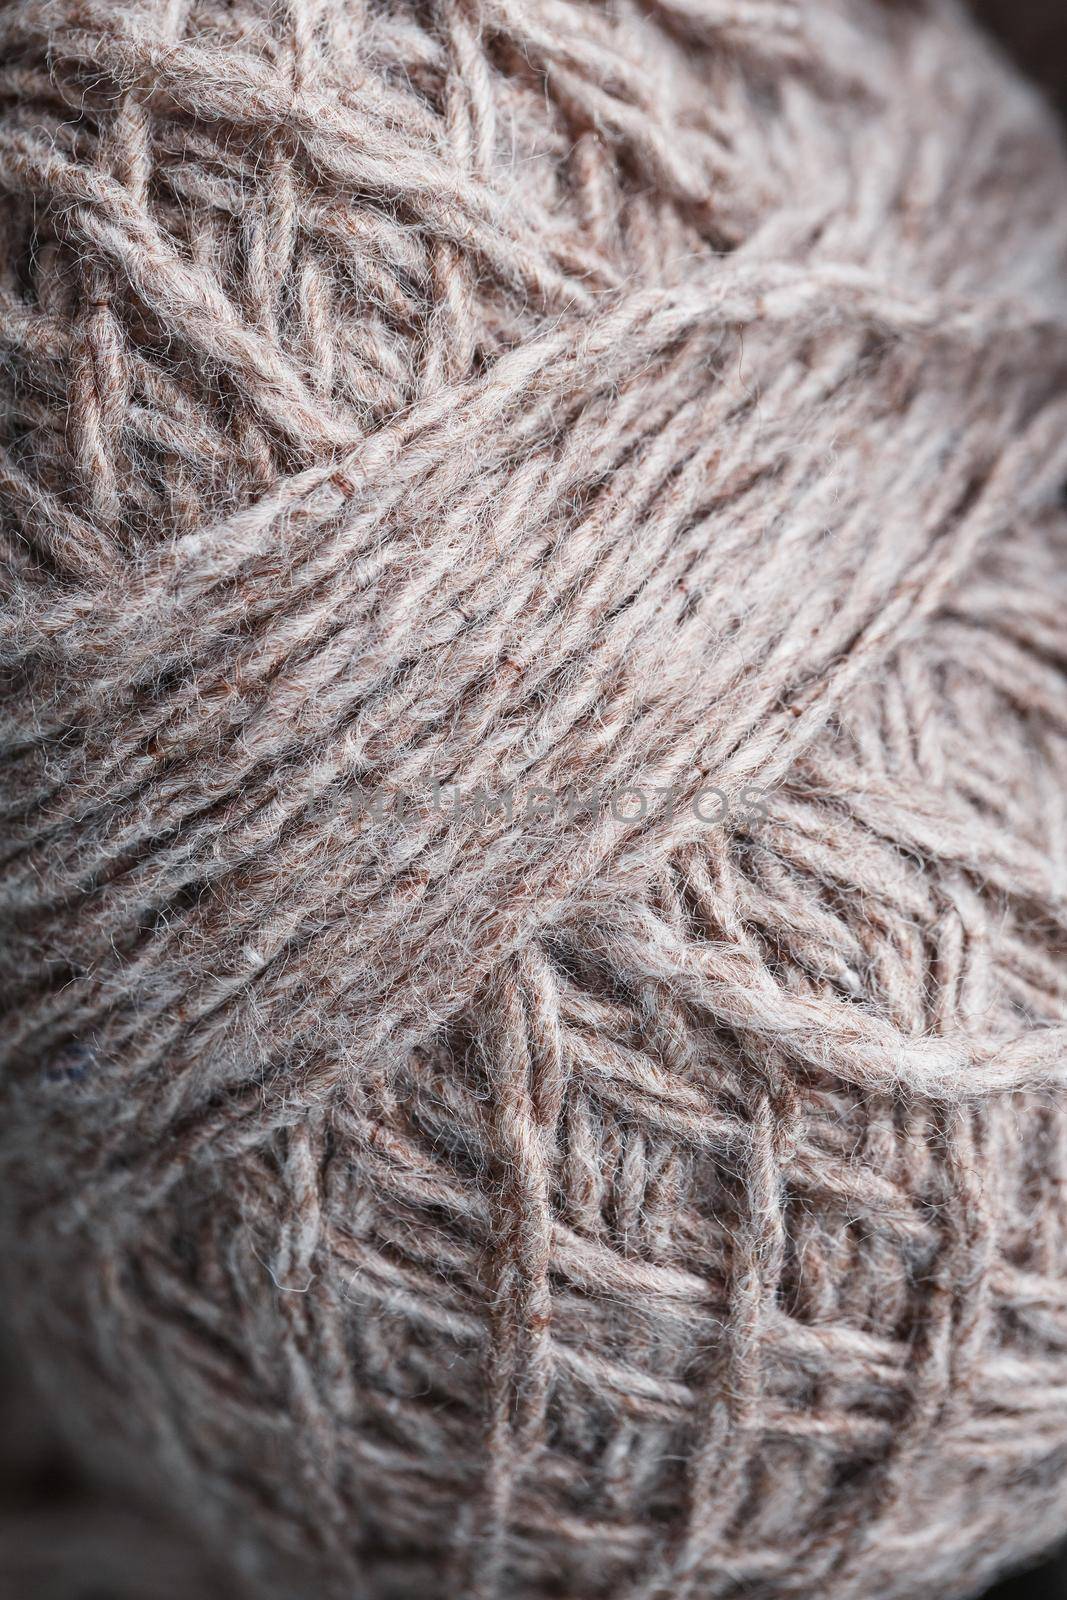 Balls of brown wool yarn made of natural wool. Needlework